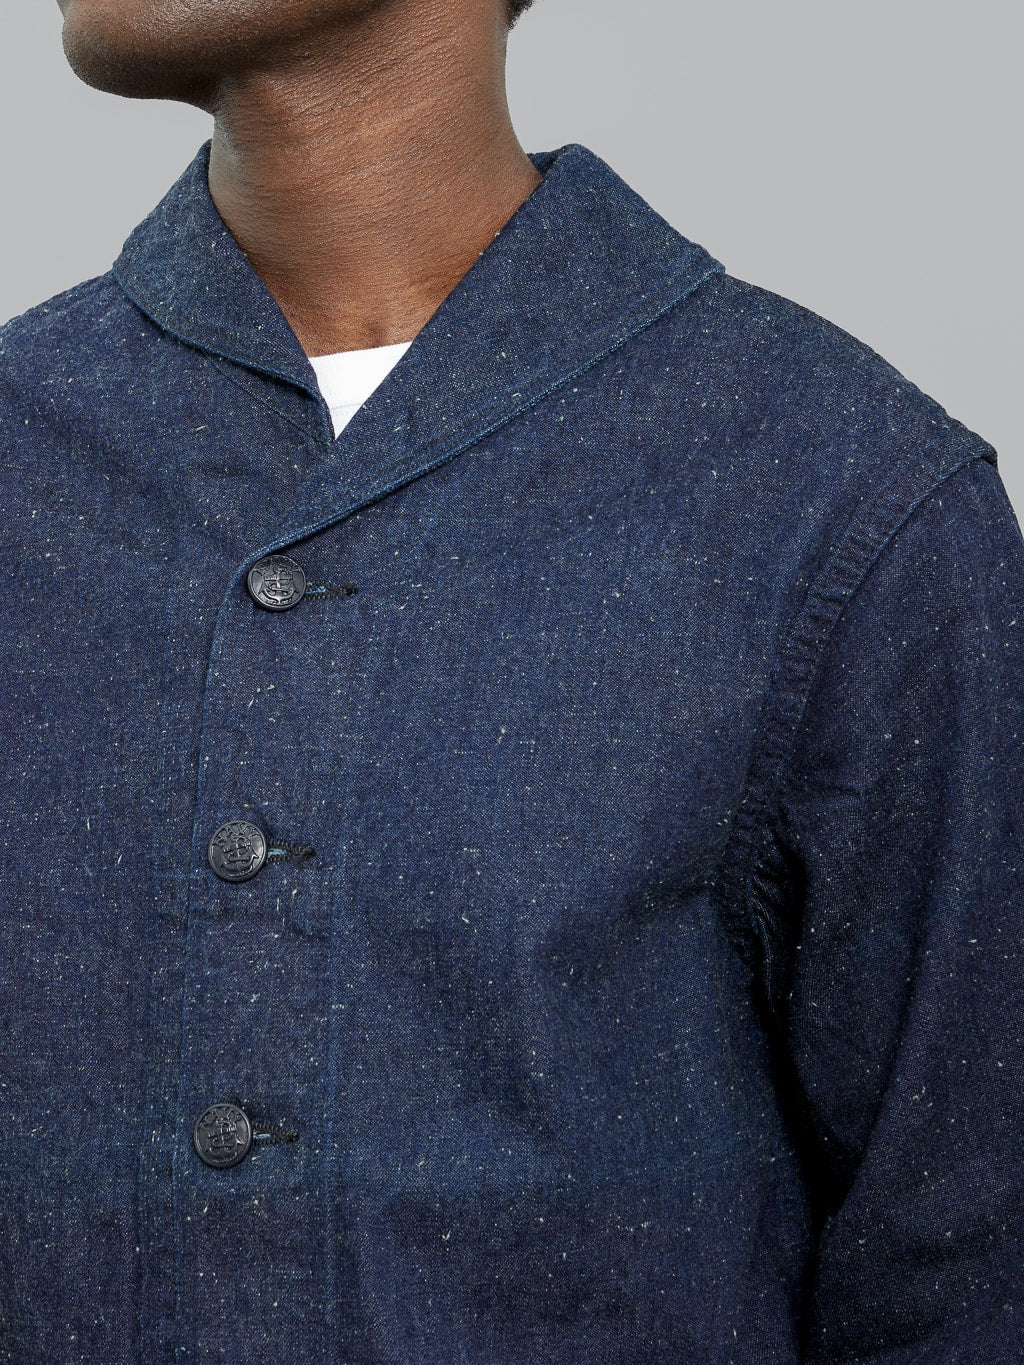 tcb usn vintage navy seamens jacket shawl collar